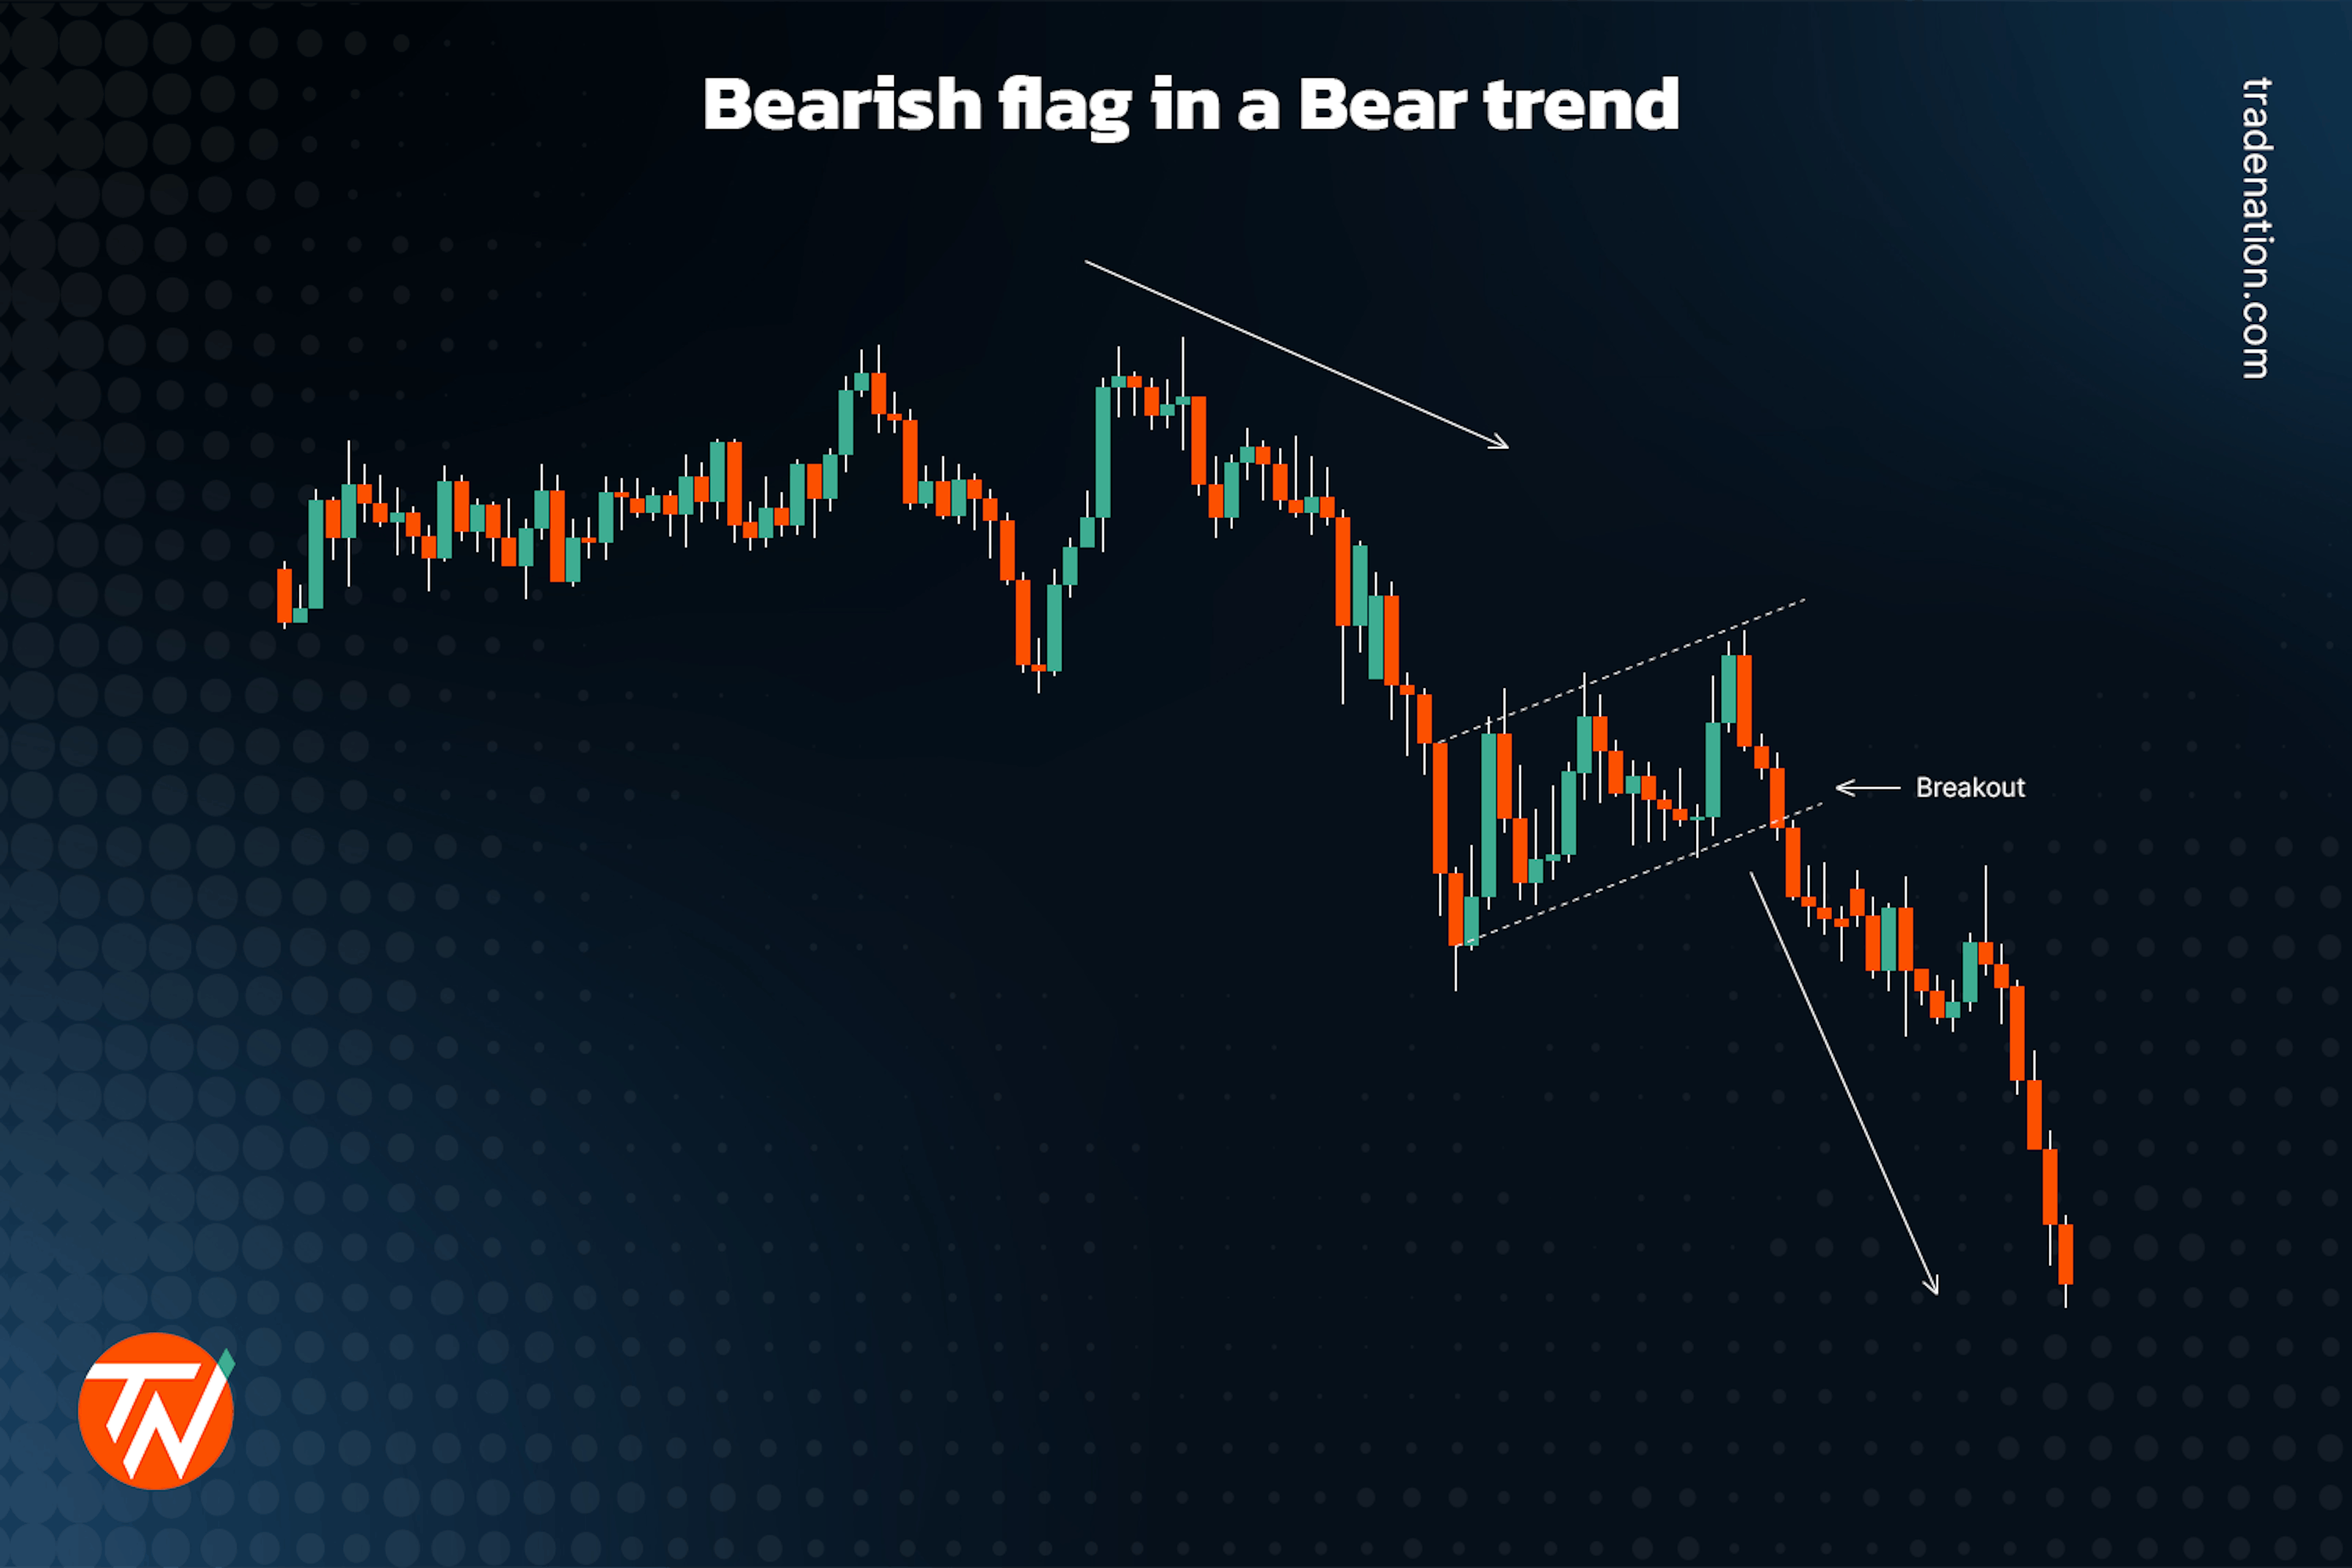 Bearish flag in a bear trend